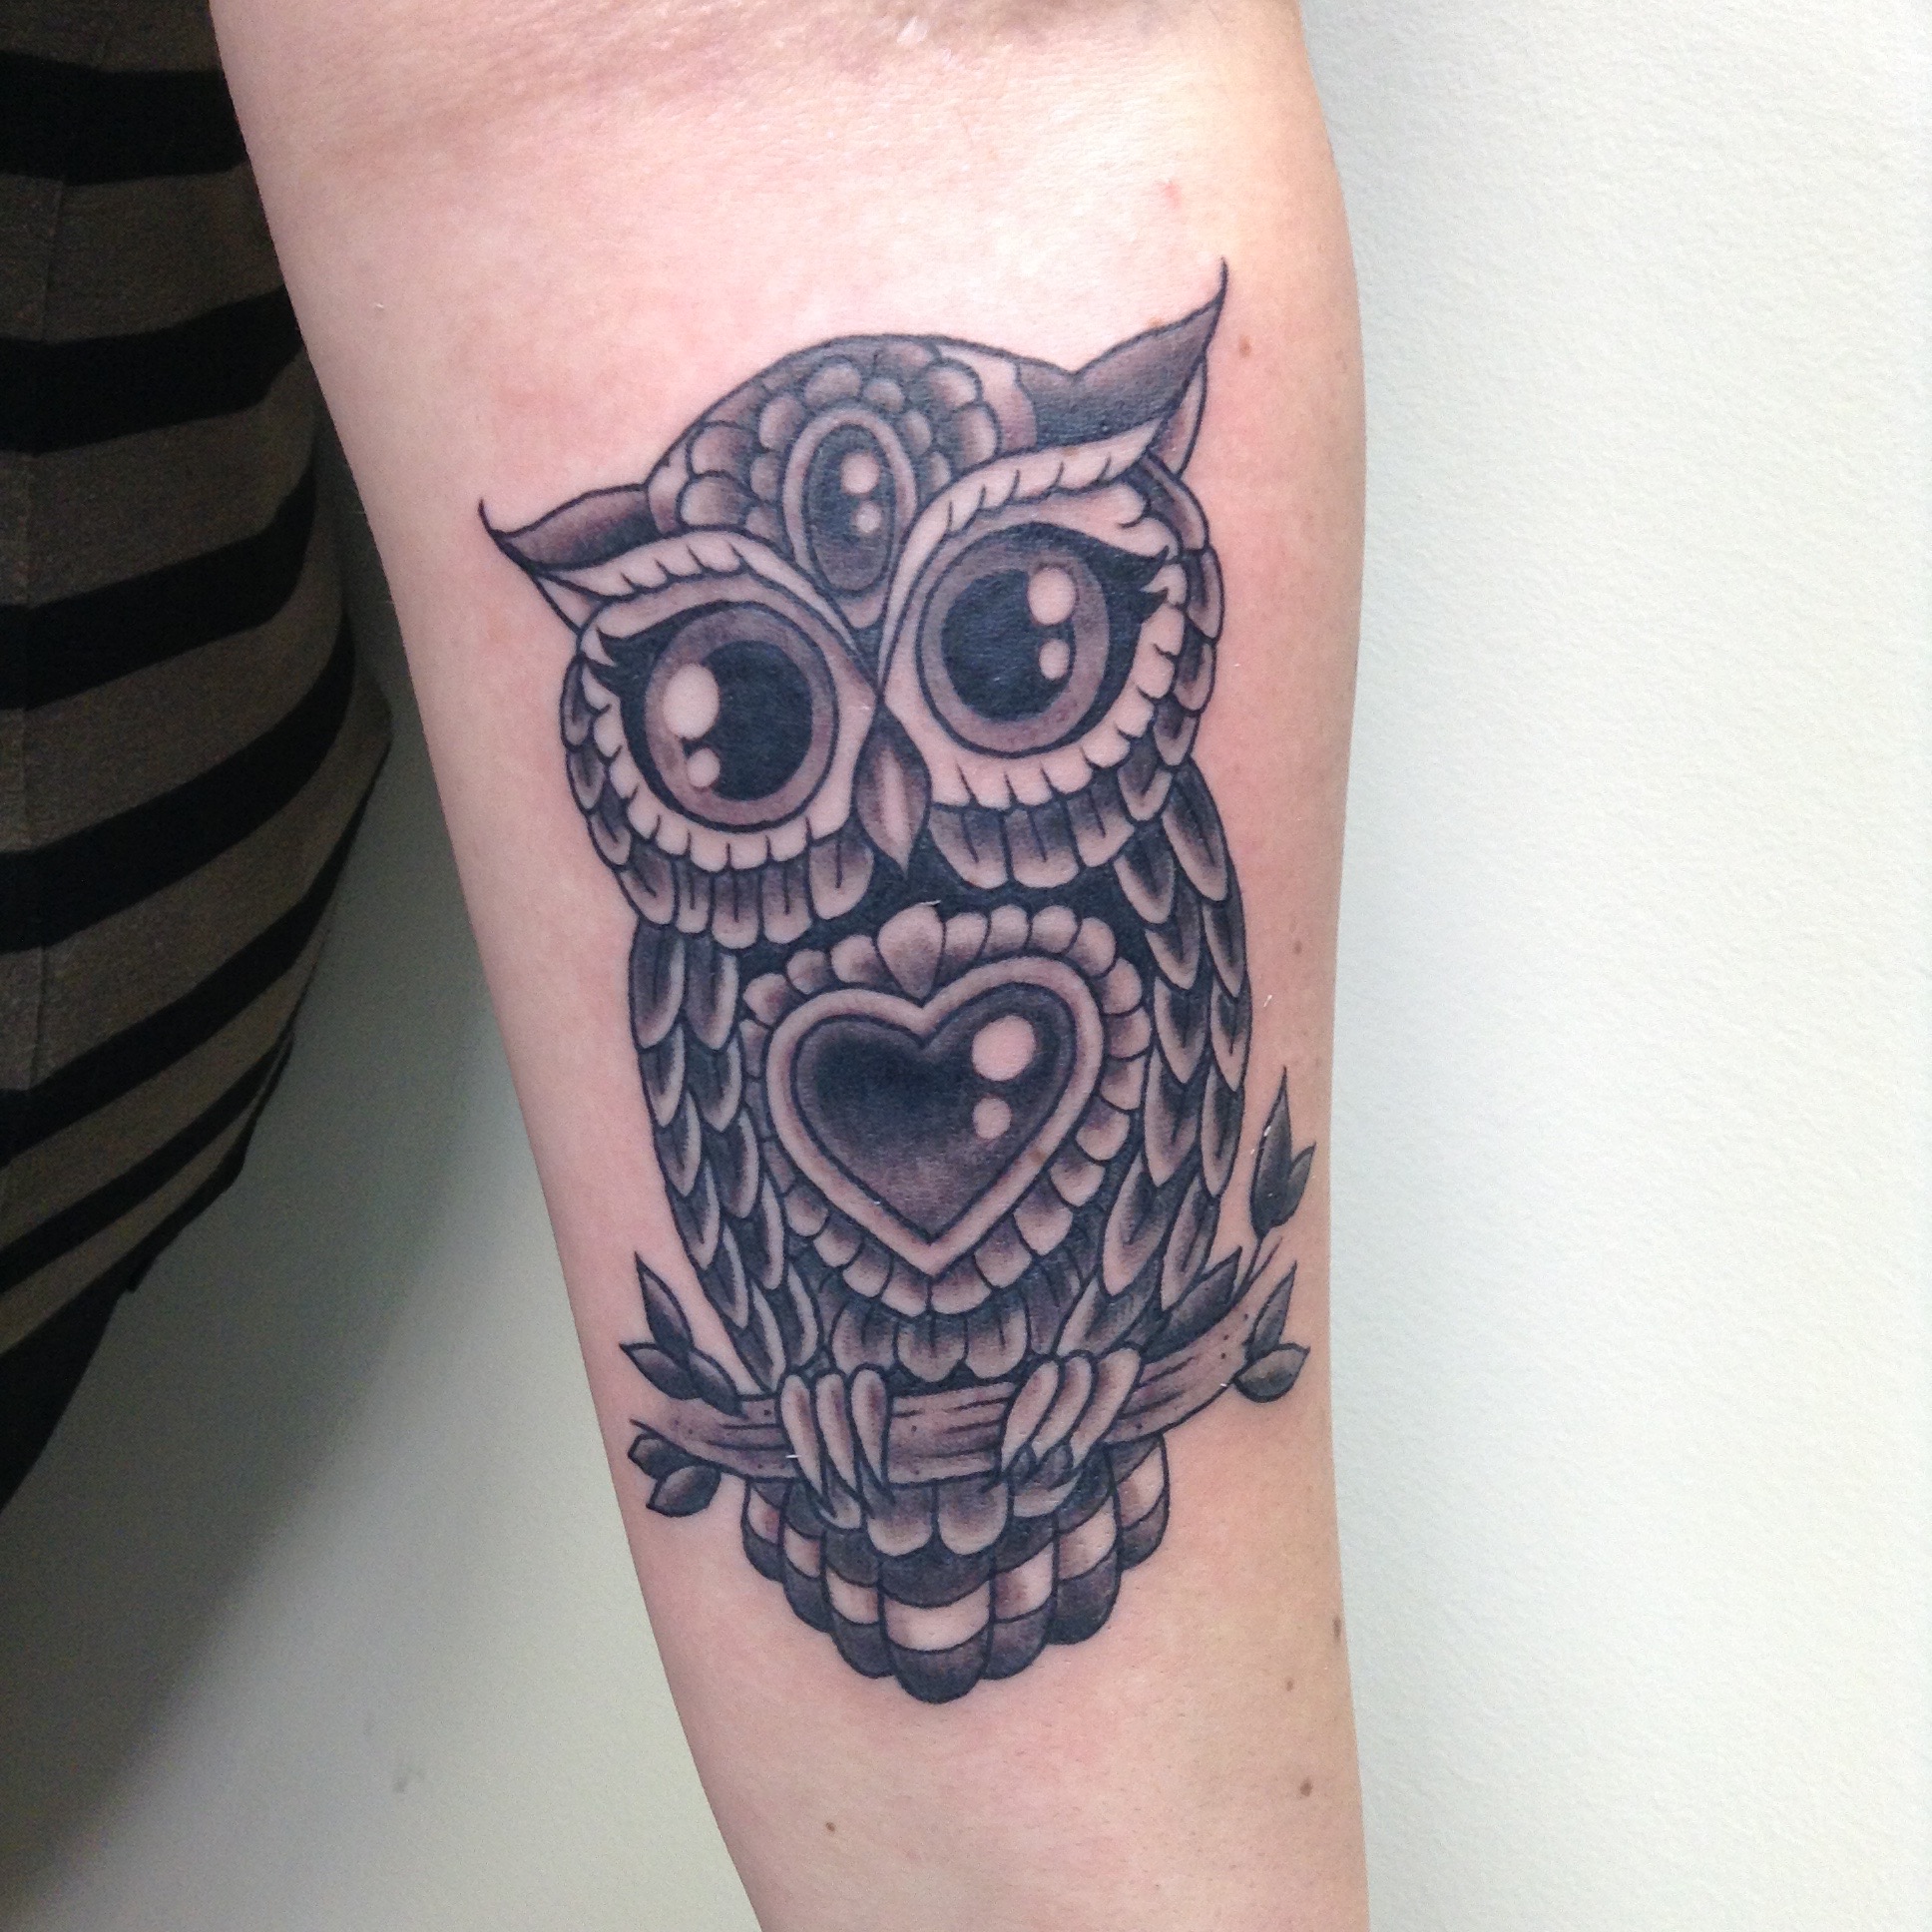 Owl tattoo by RobertArgal on DeviantArt